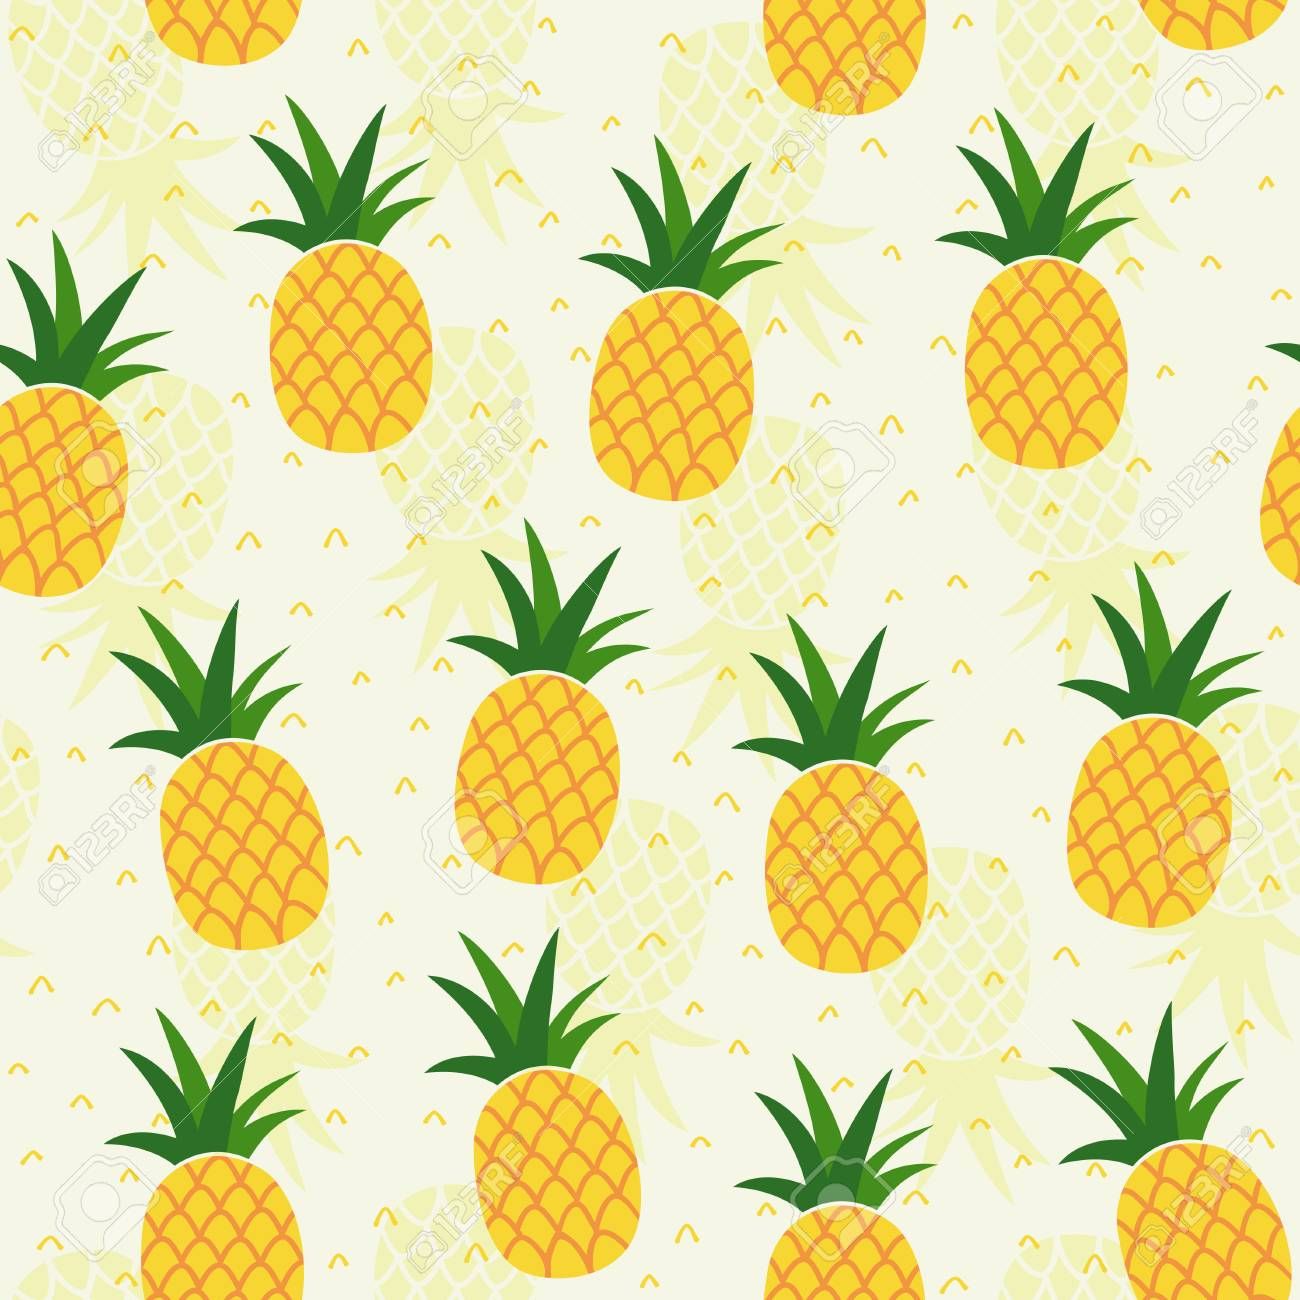 Cool Pineapple Wallpaper Group (65+), descarga gratuita